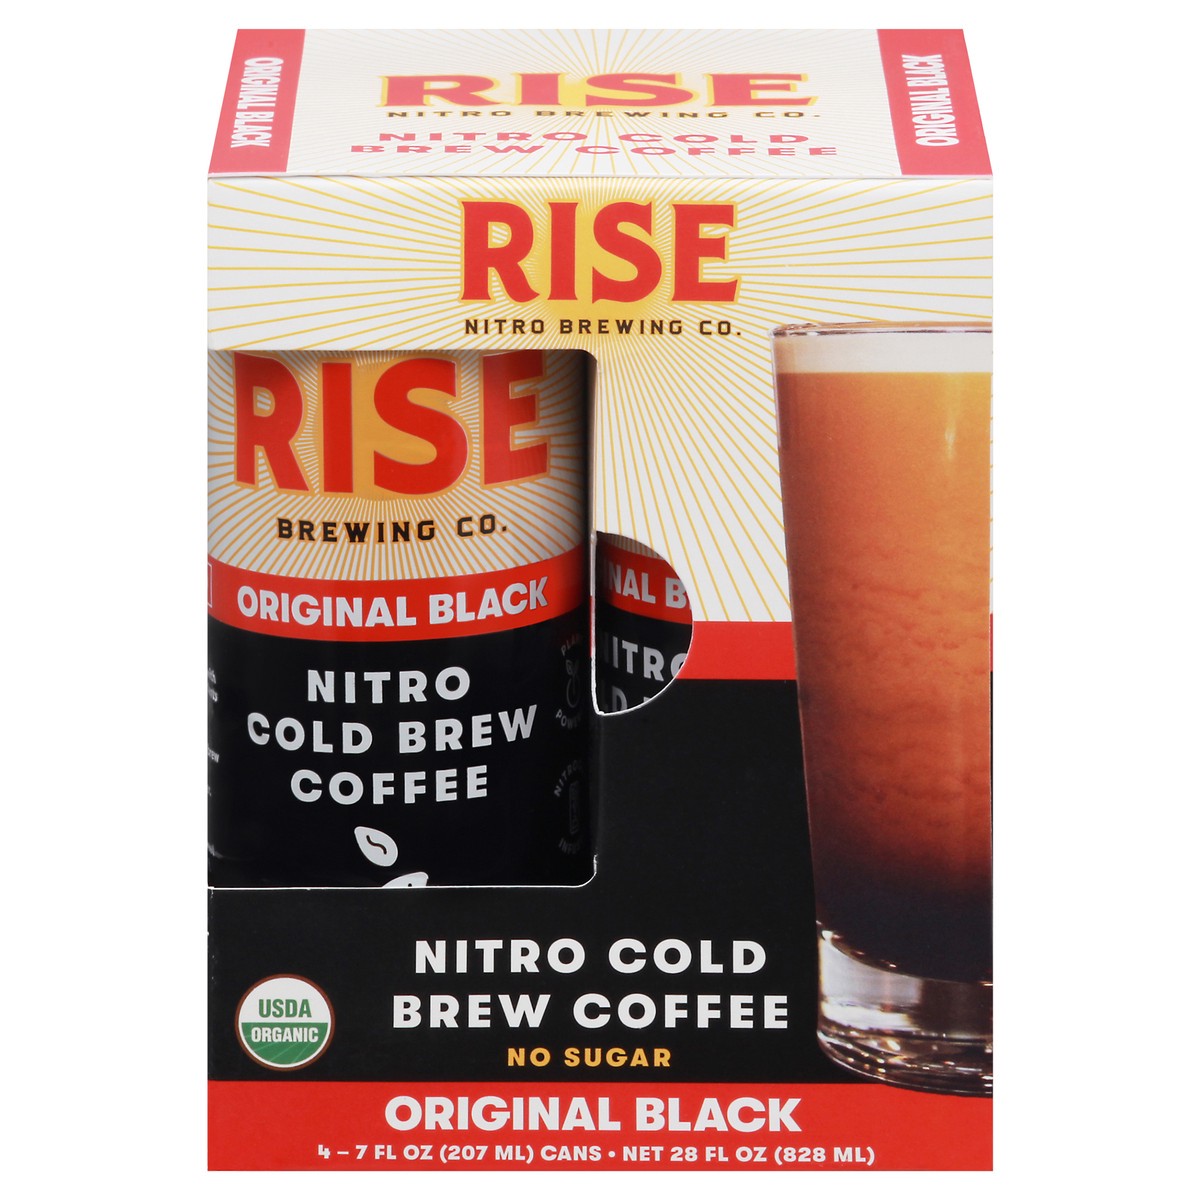 slide 1 of 10, RISE Brewing Co. Nitro Cold Brew Original Black Coffee 4-7 fl oz Cans, 4 ct